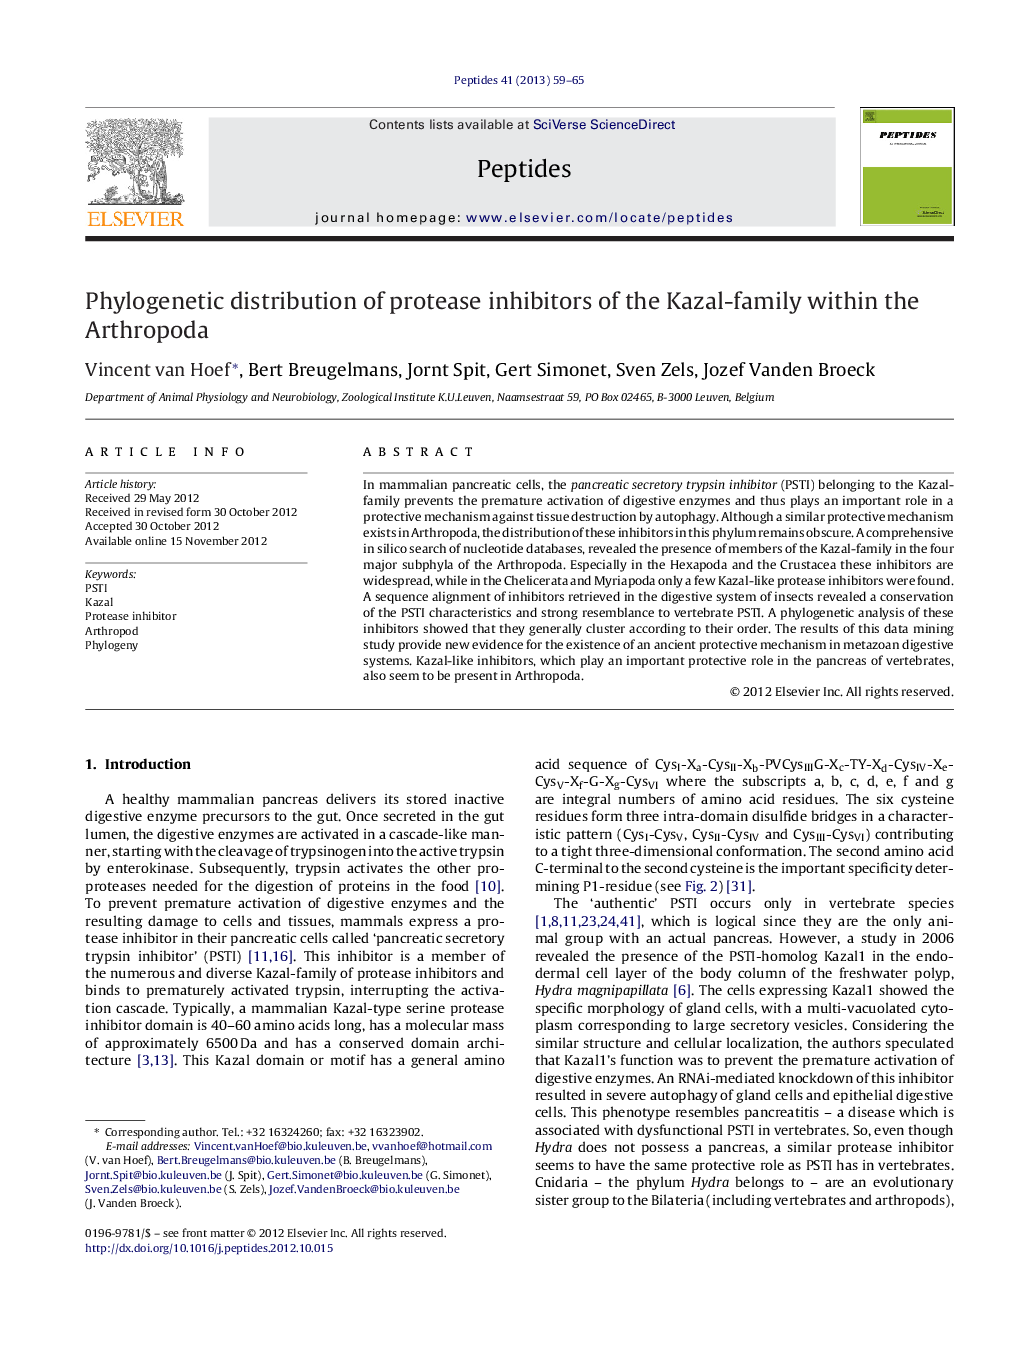 Phylogenetic distribution of protease inhibitors of the Kazal-family within the Arthropoda